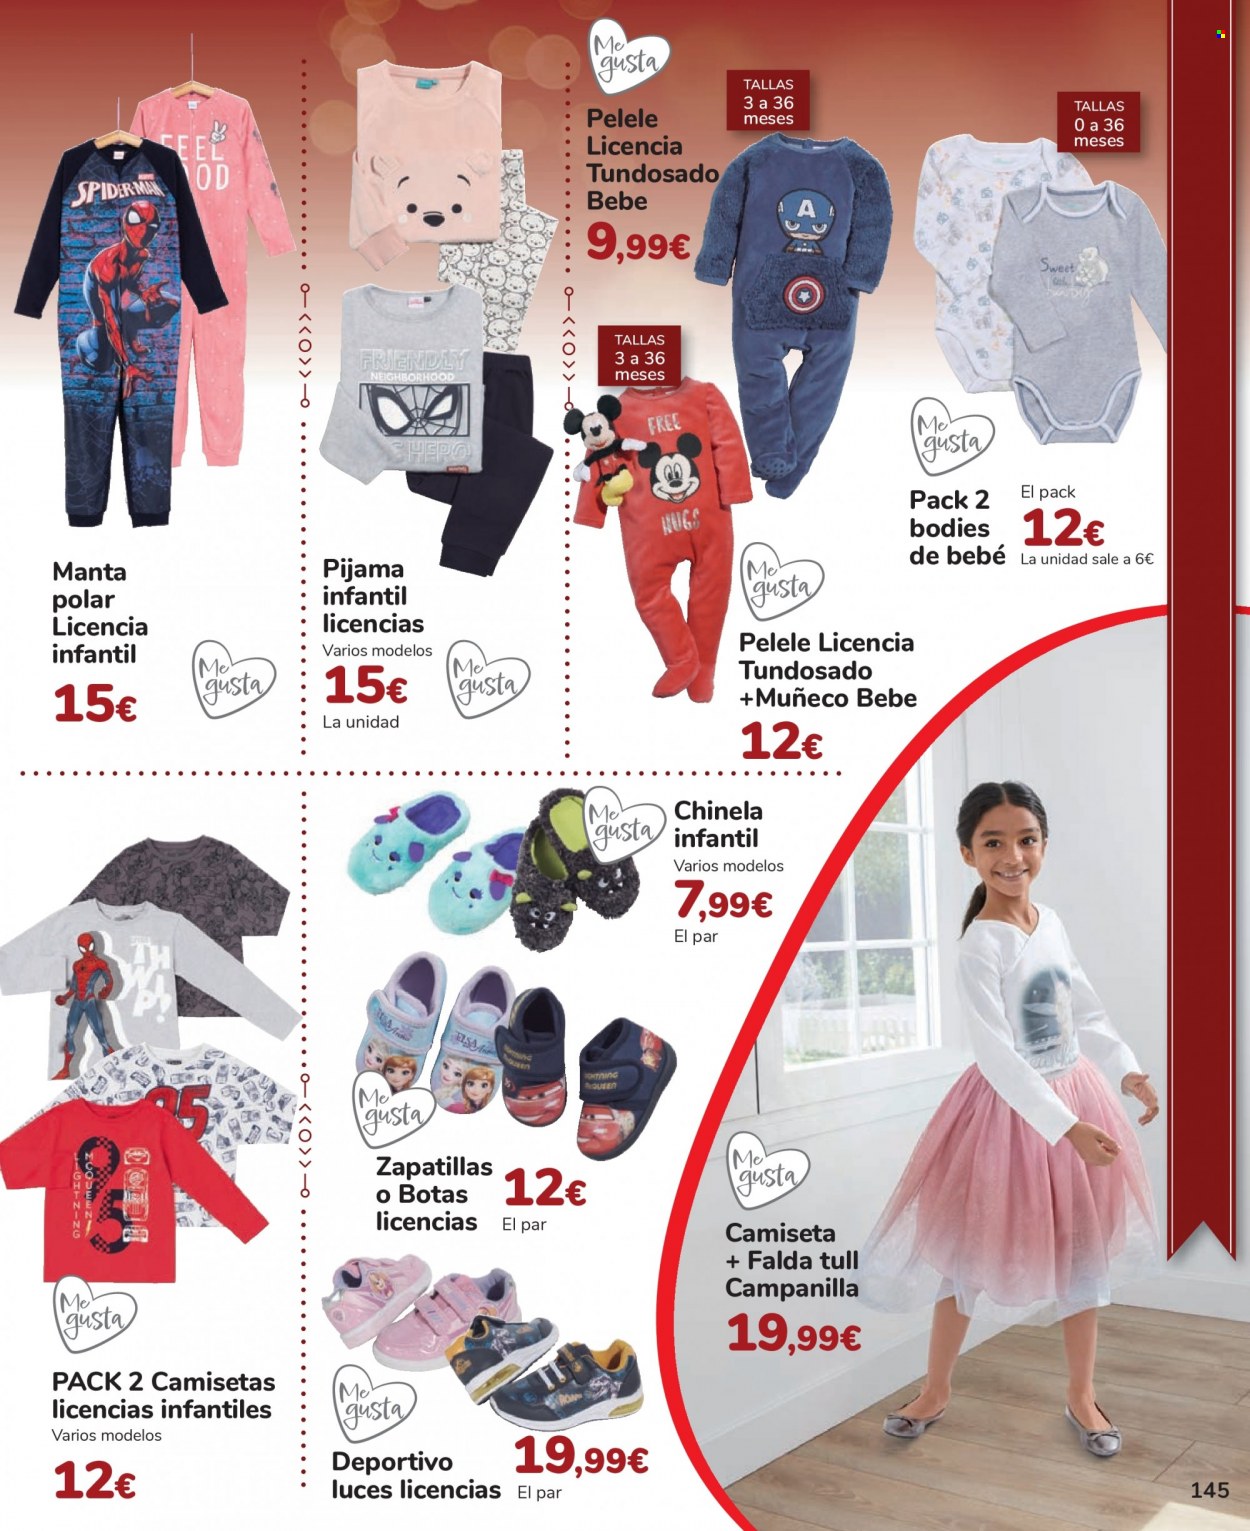 thumbnail - Folleto actual Carrefour - 04/11/21 - 24/12/21 - Ventas - botas, Spiderman, zapatilla, manta, falda, camiseta, peleles, pijama, muñeco. Página 145.